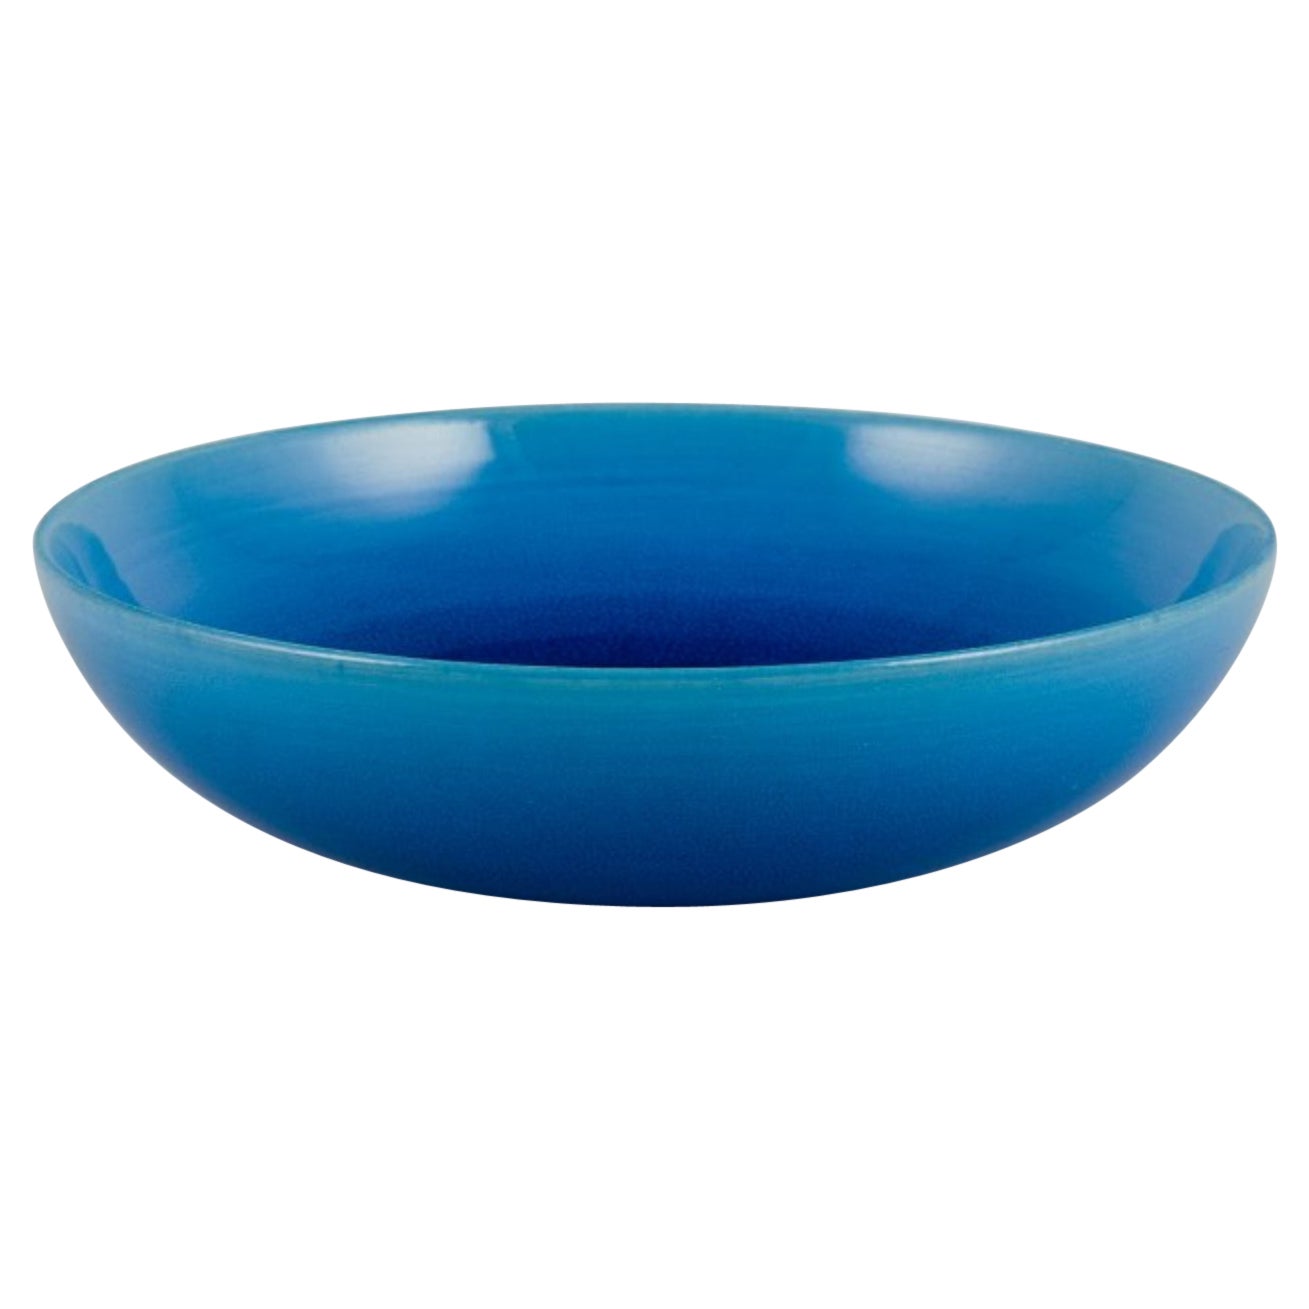 Carl Harry Stålhane for Rörstrand. Ceramic bowl in turquoise glaze. Mid-20th C. For Sale